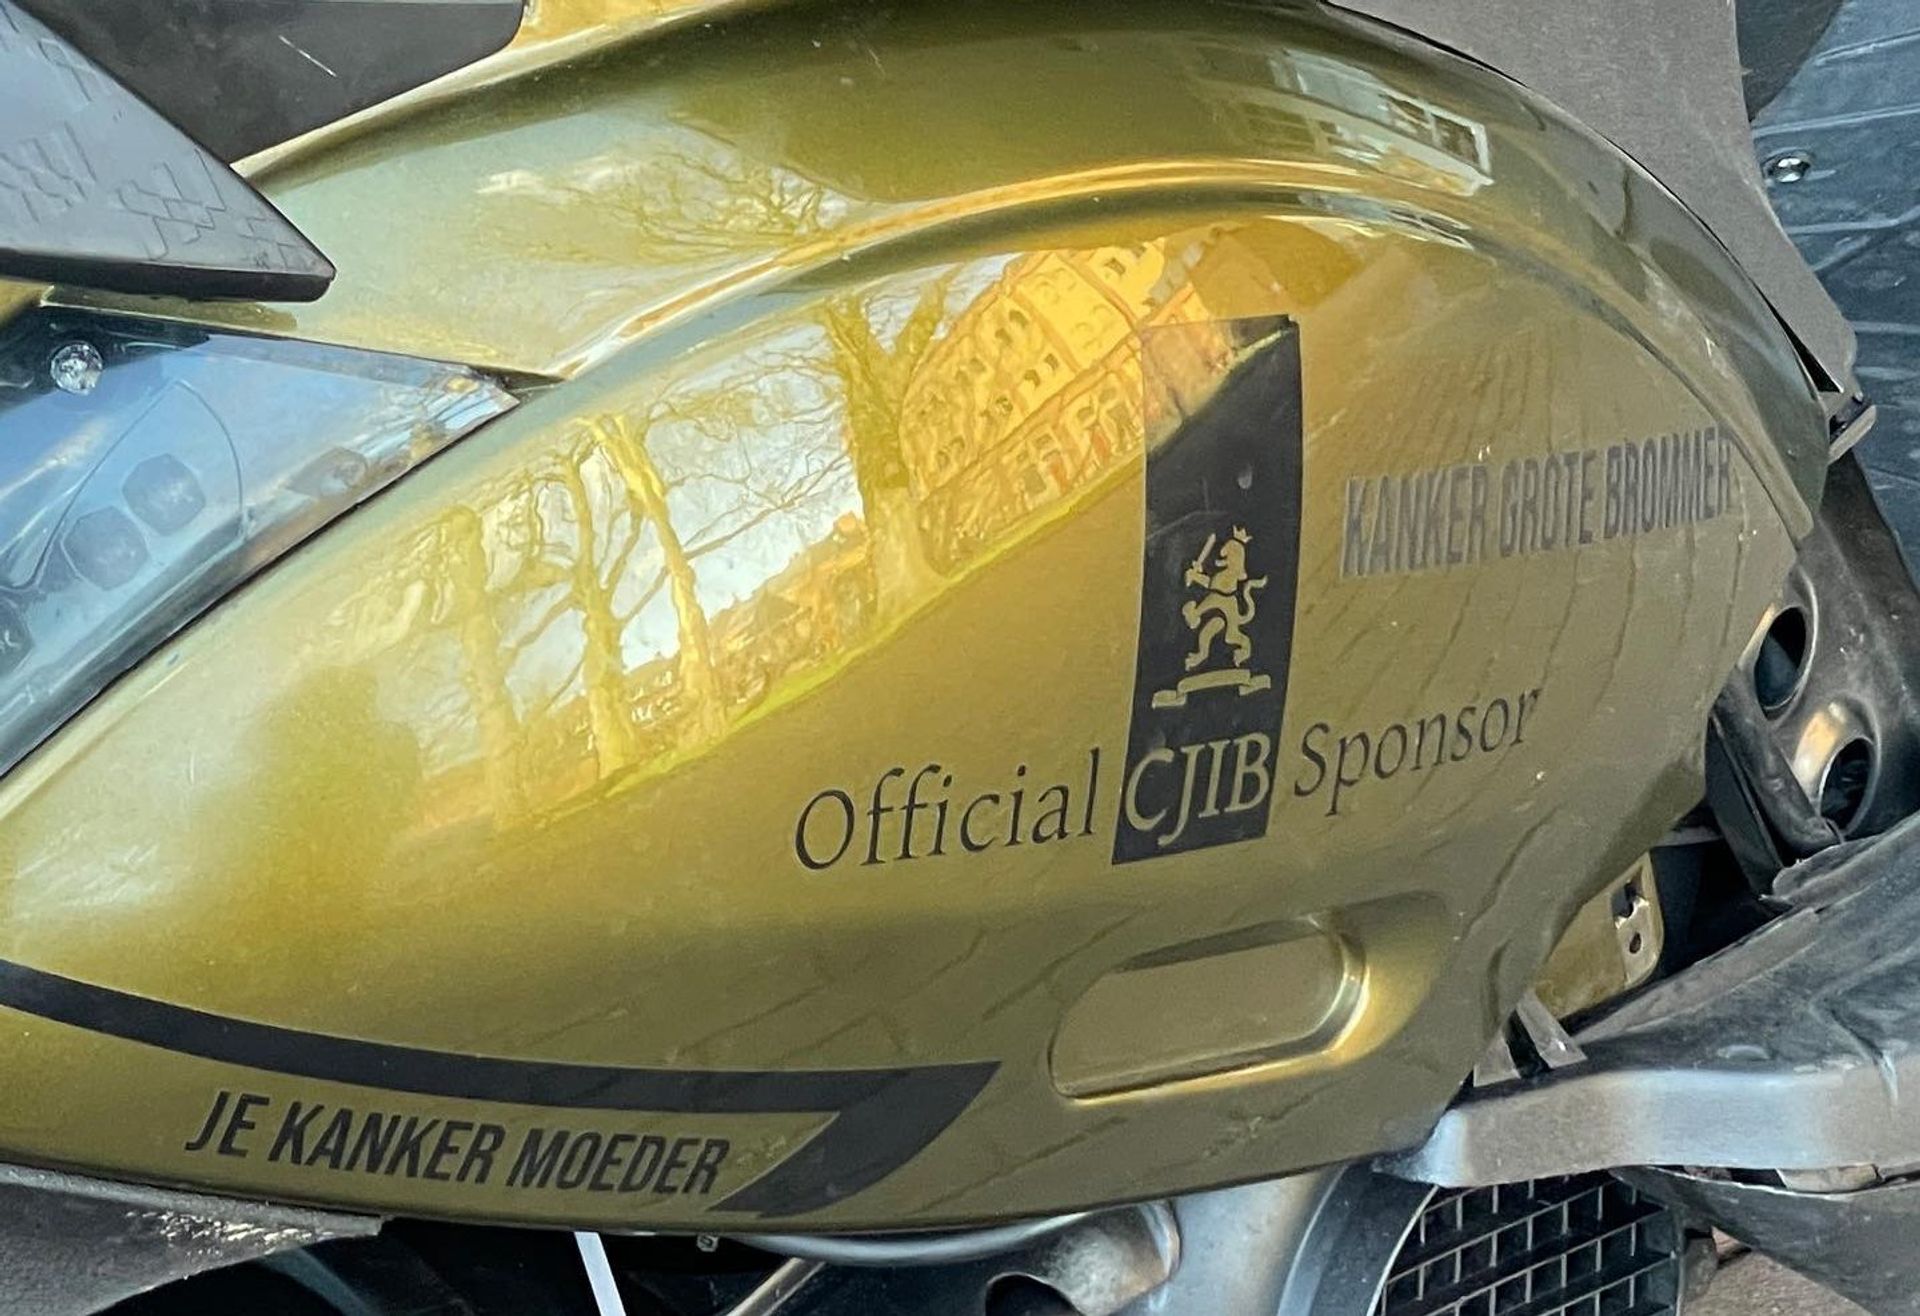 scooter official CJIB sponsor